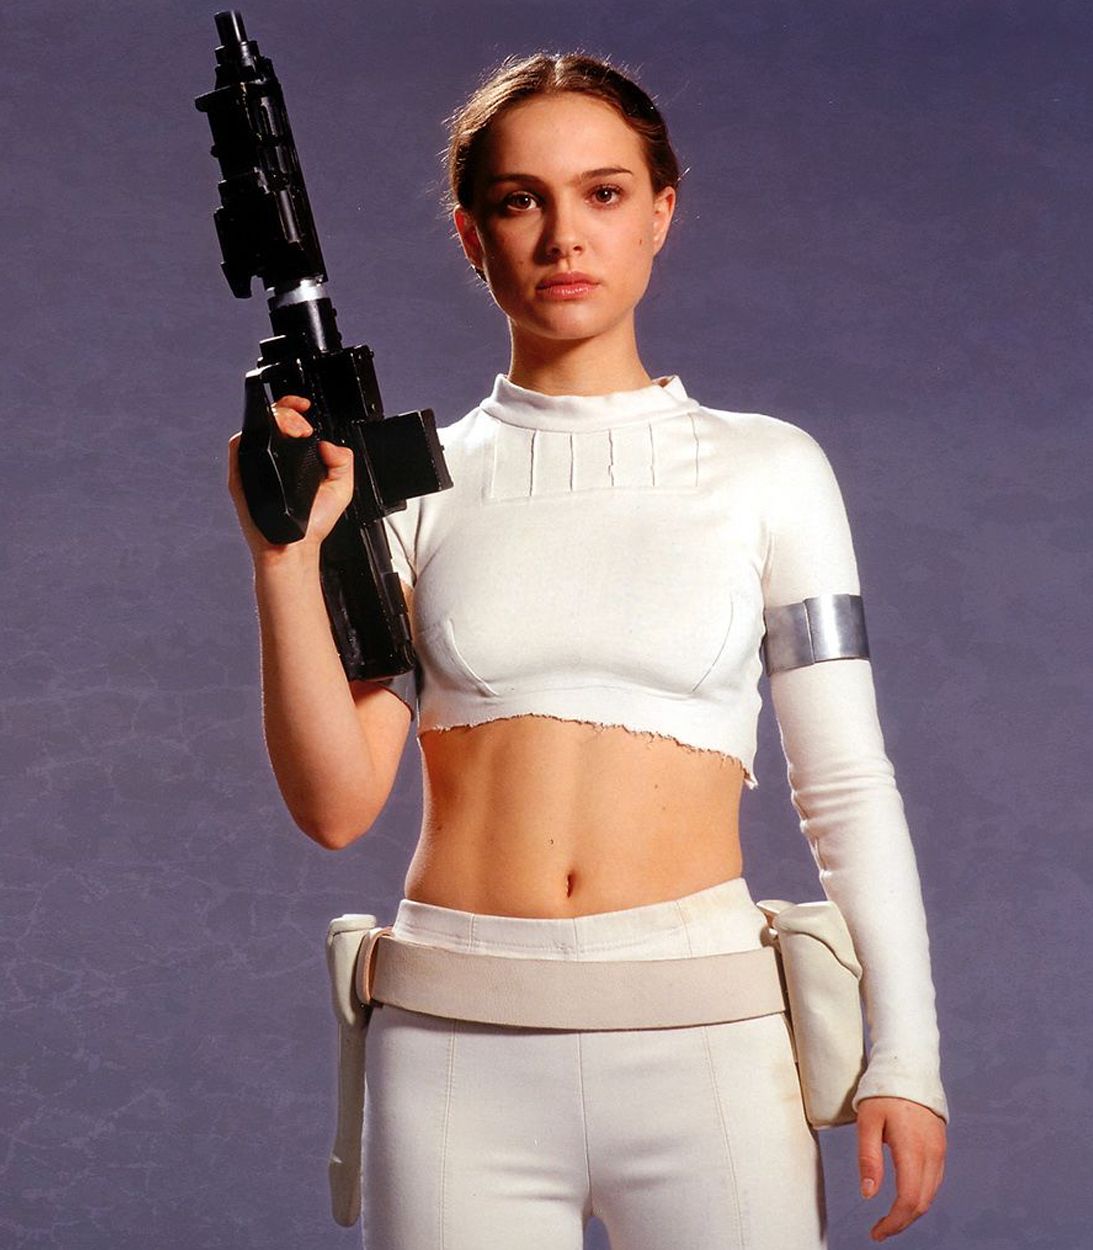 Natalie Portman in Star Wars Attack of the Clones vertical